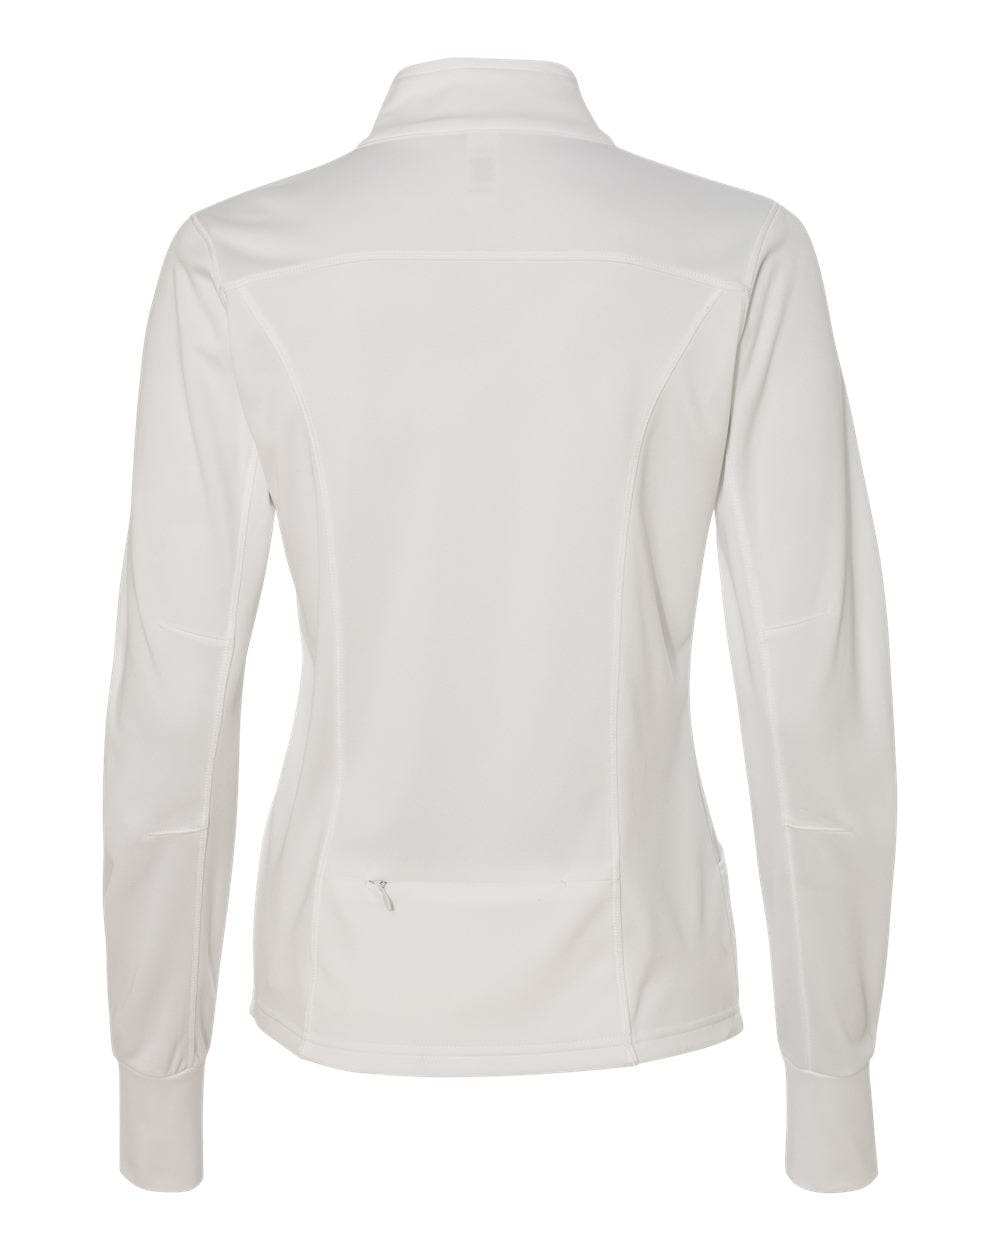 PBPRO Women's Apparel PBPRO Women's Poly-Tech Full-Zip Performance Jacket - White